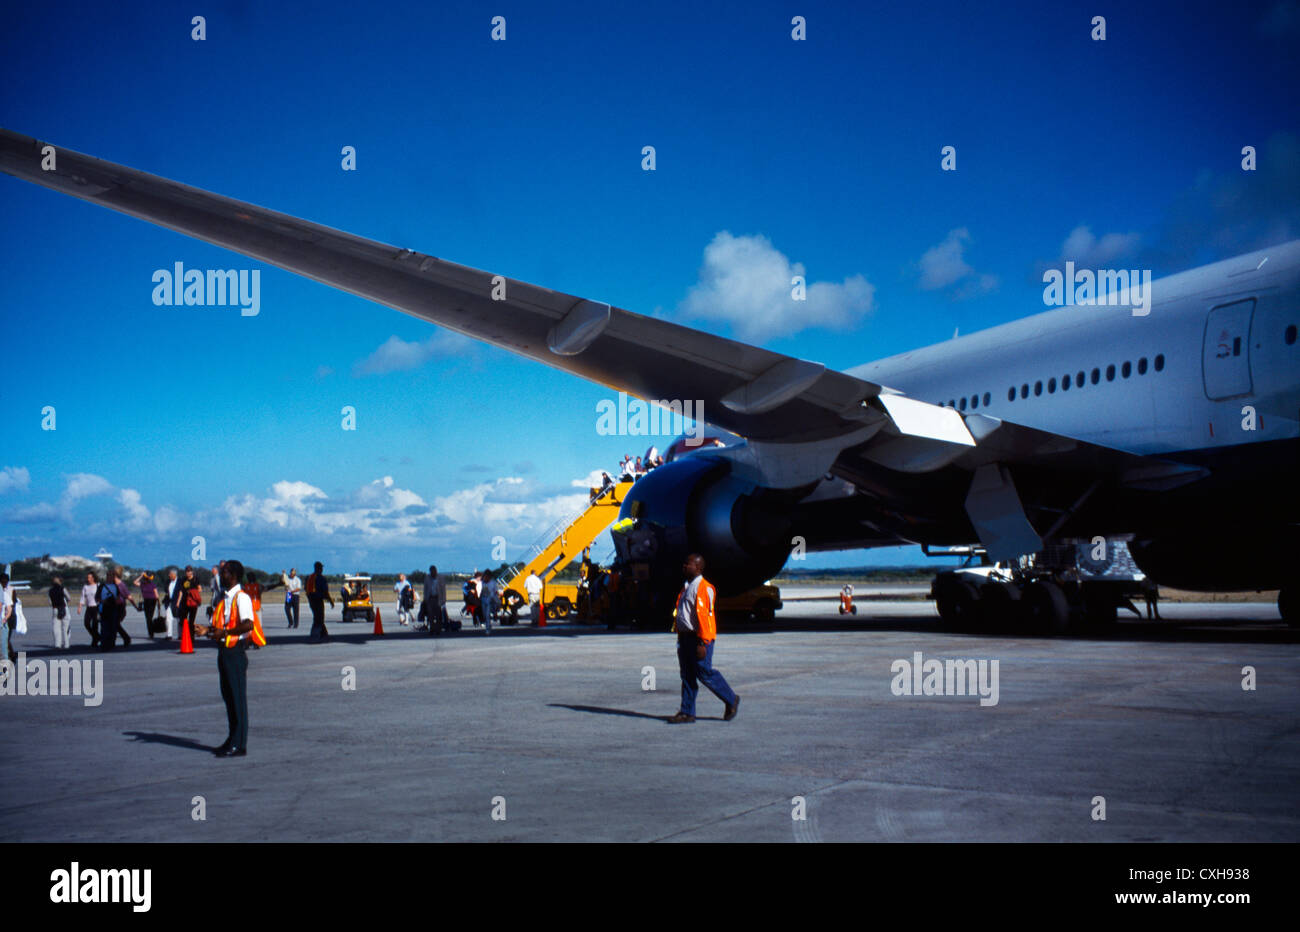 V C Bird Airport Antigua British Airways Plane Stock Photo